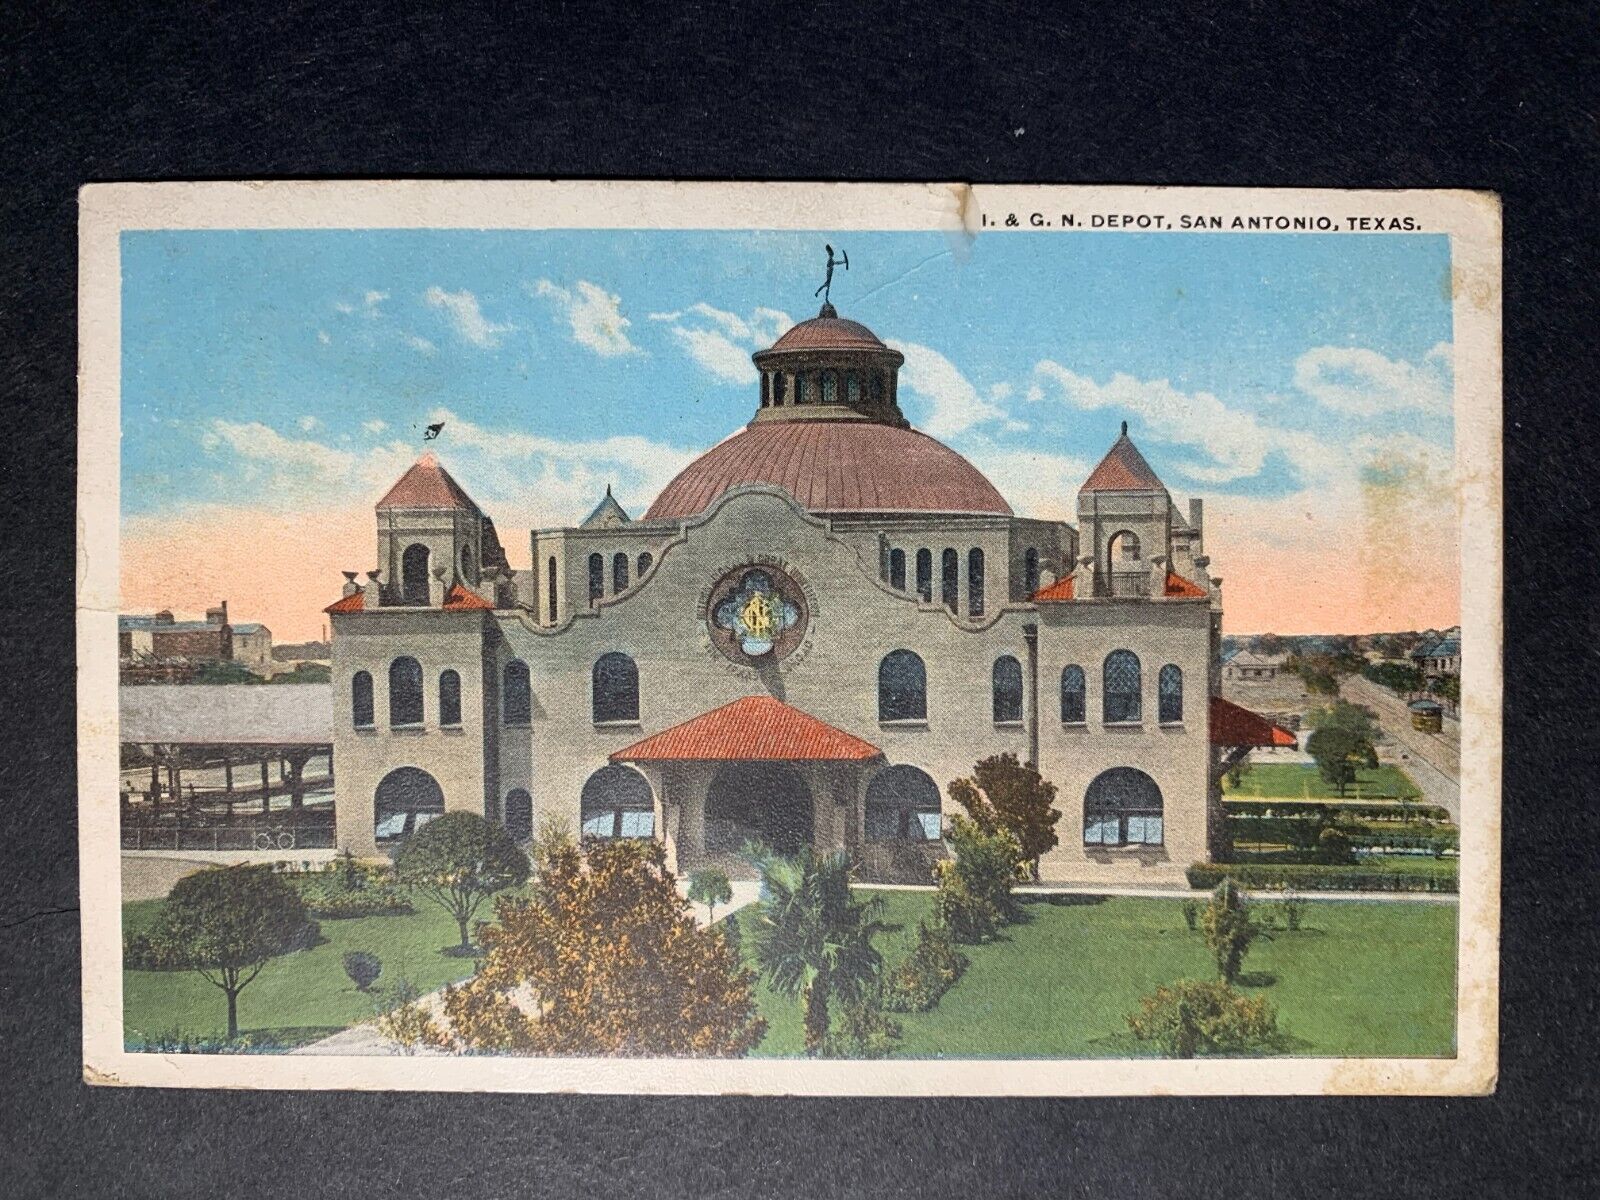 San Antonio, Texas postcard of I.&G.N. Depot posted 1919